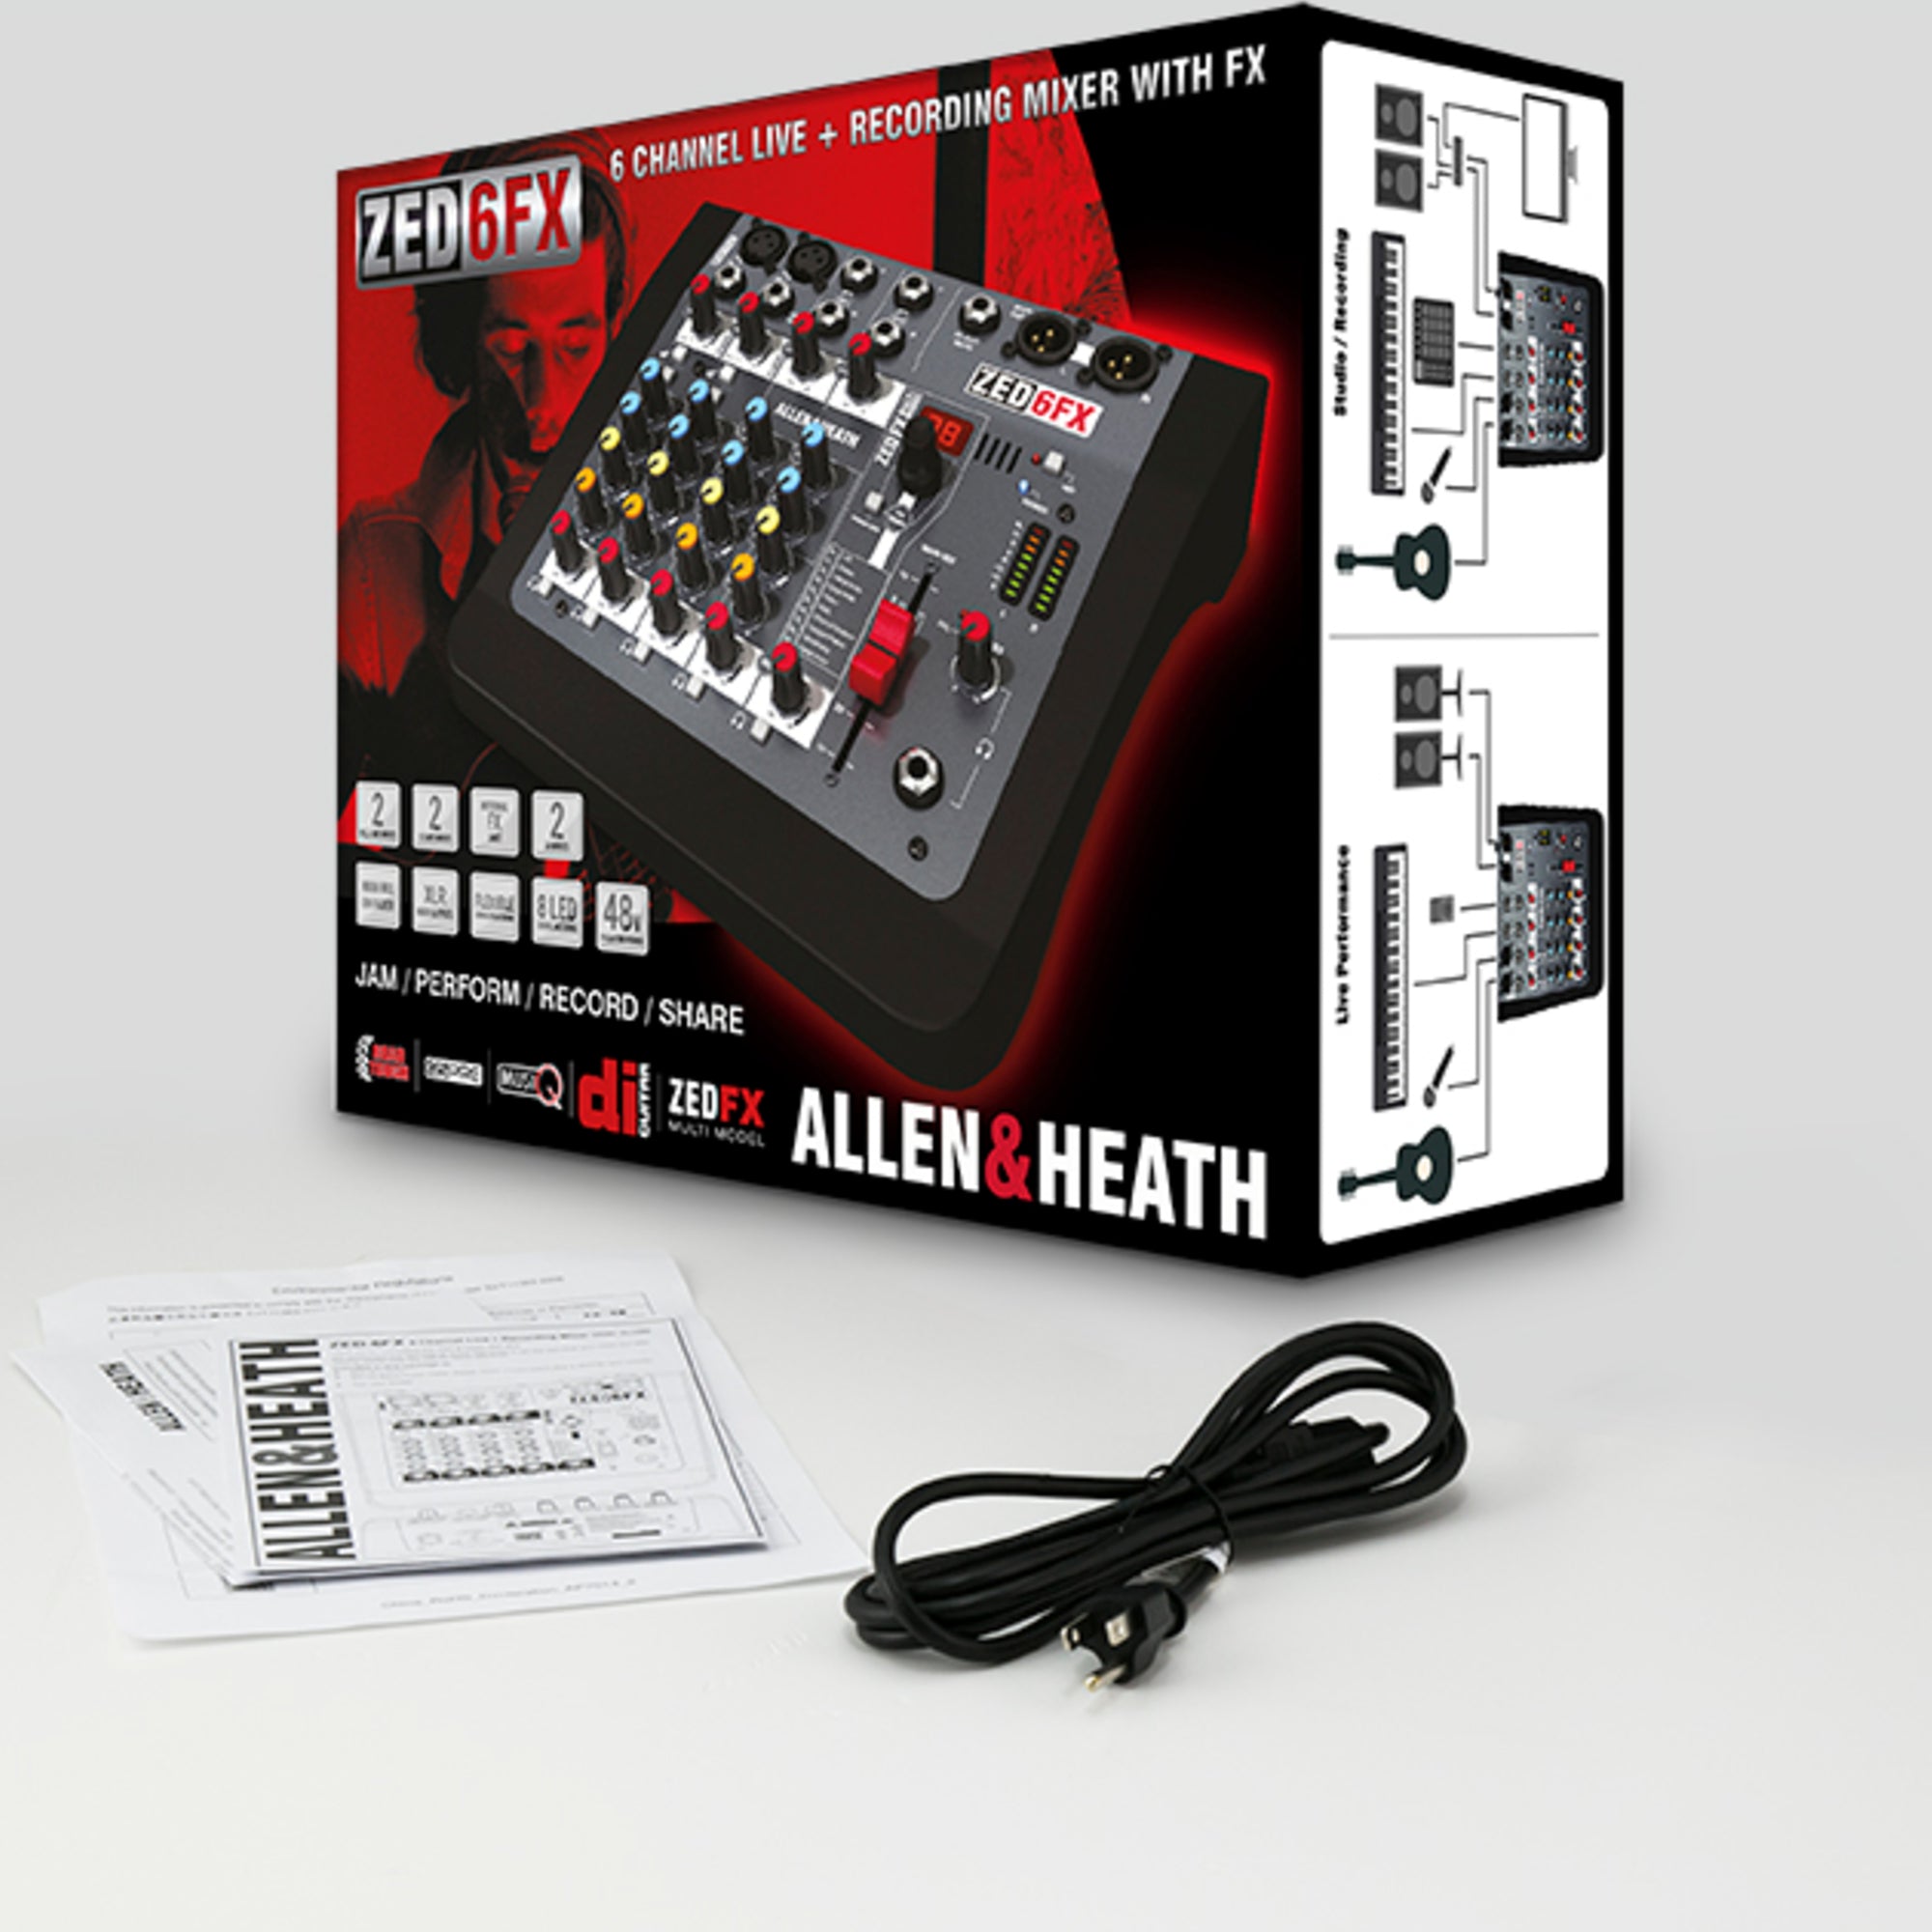 Allen & Heath ZED-6fx 4-Channel Mixer with Effects